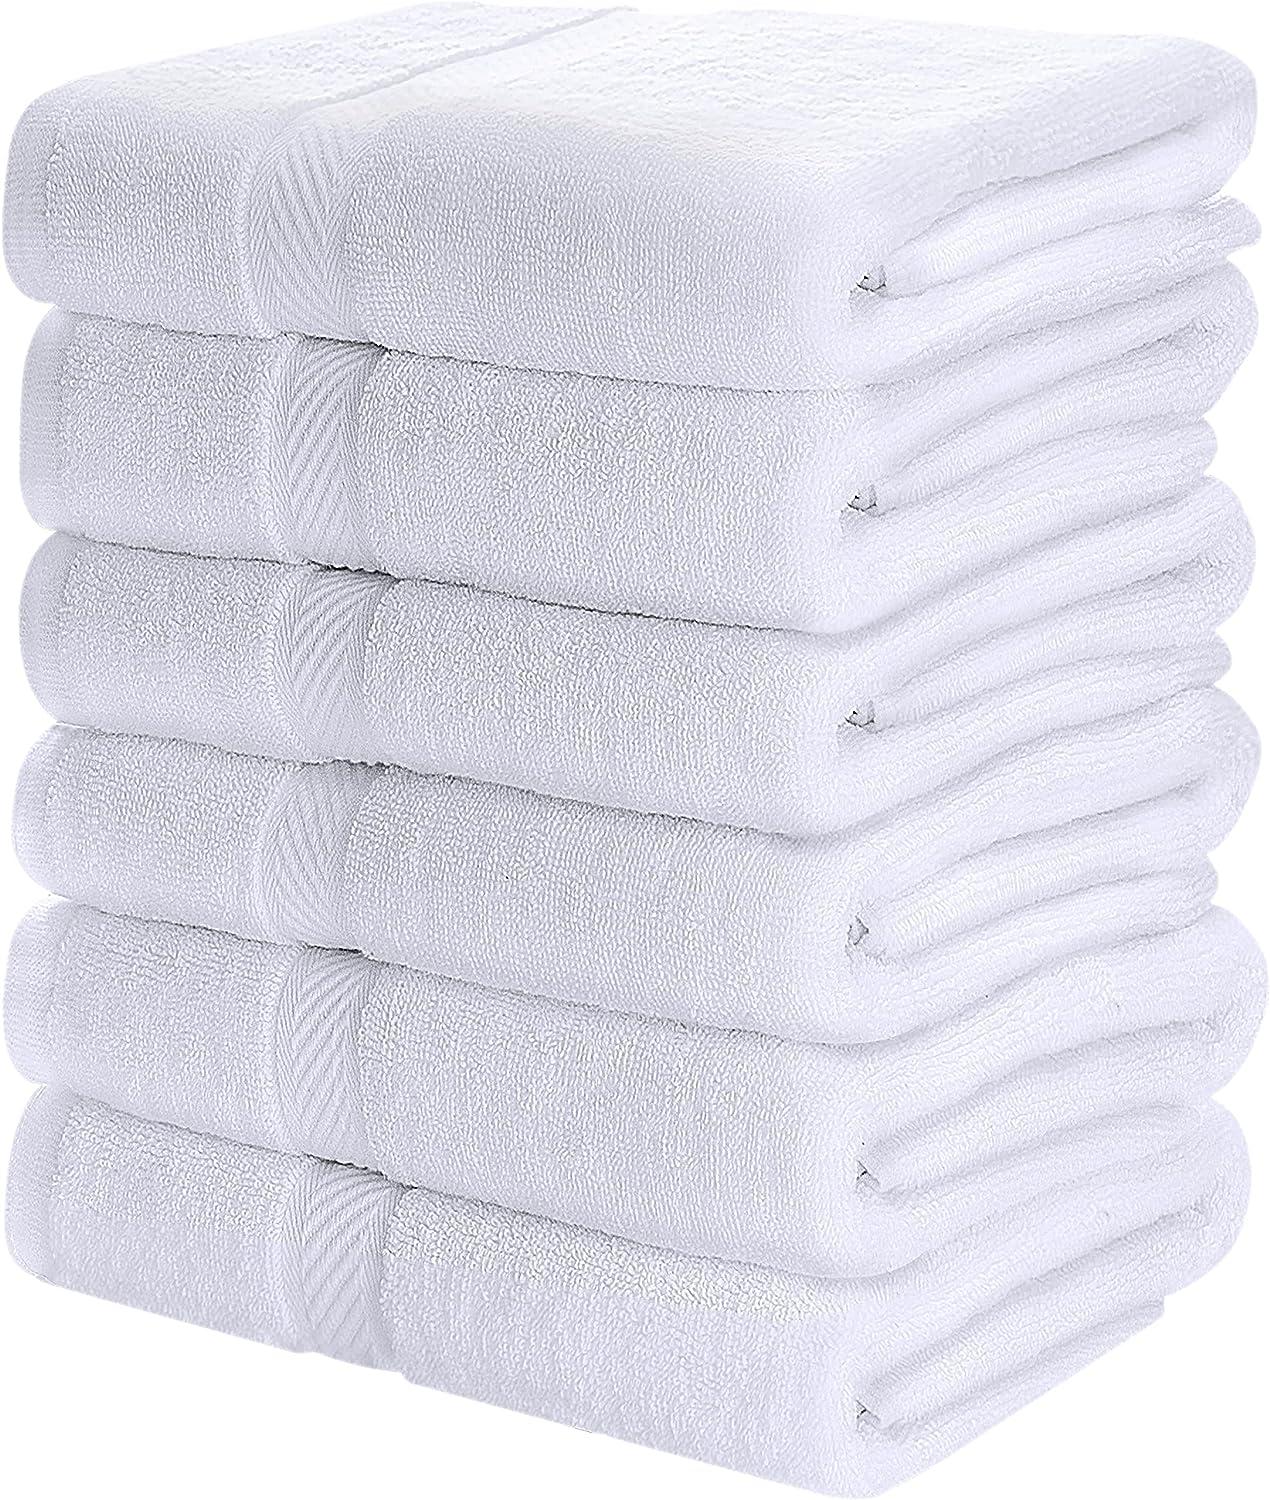 Welspun Soft Twist Bath Towel 56L x 30W, White - Pkg Qty 2